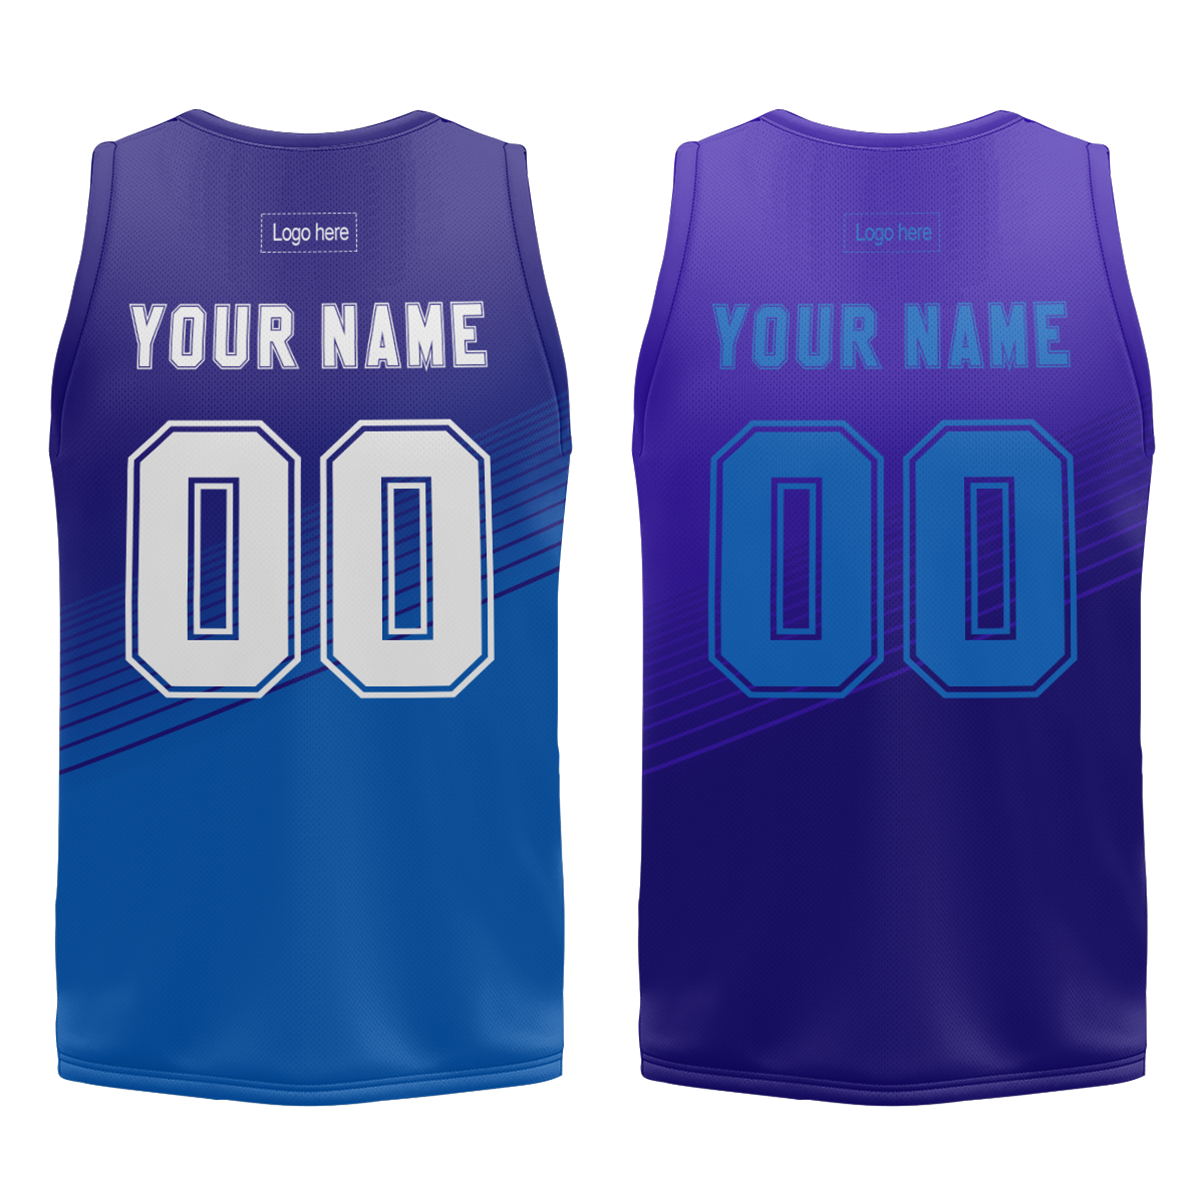 custom-basketball-jerseys-fashion-design-printing-sleeve-college-reversible-basketball-shirts-clothes--at-cj-pod-6